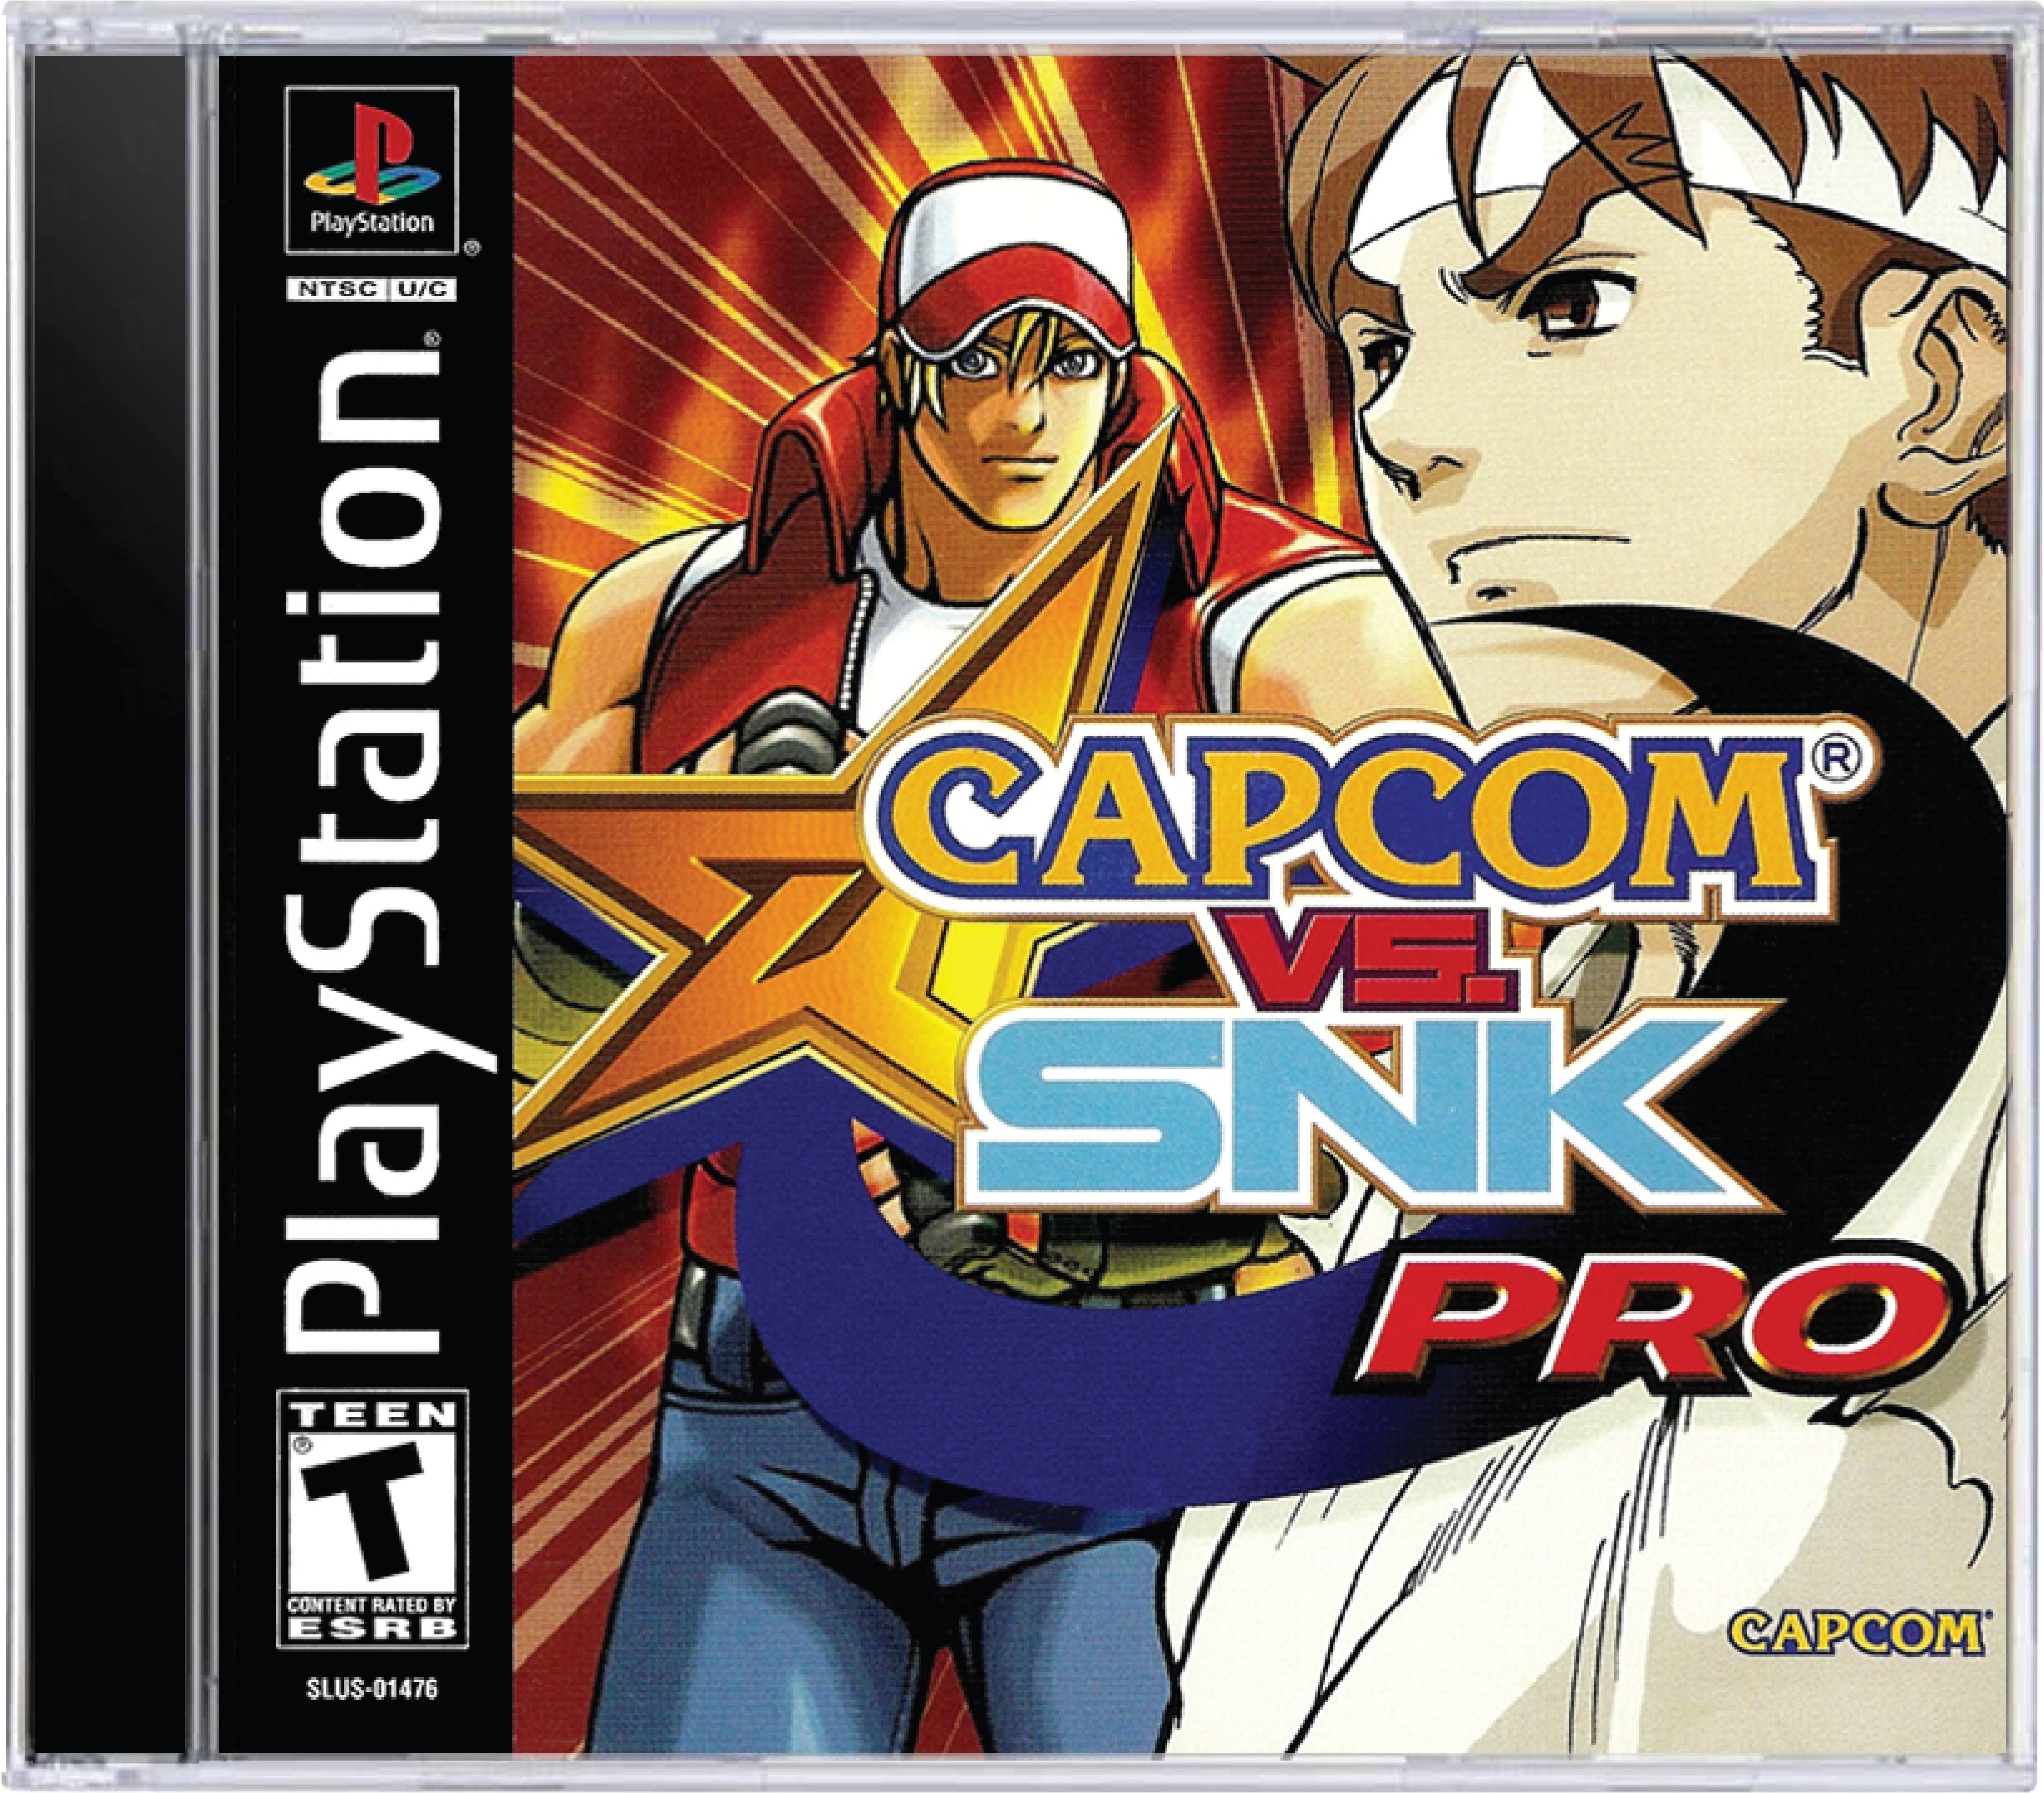 Capcom vs. SNK Pro Cover Art and Product Photo